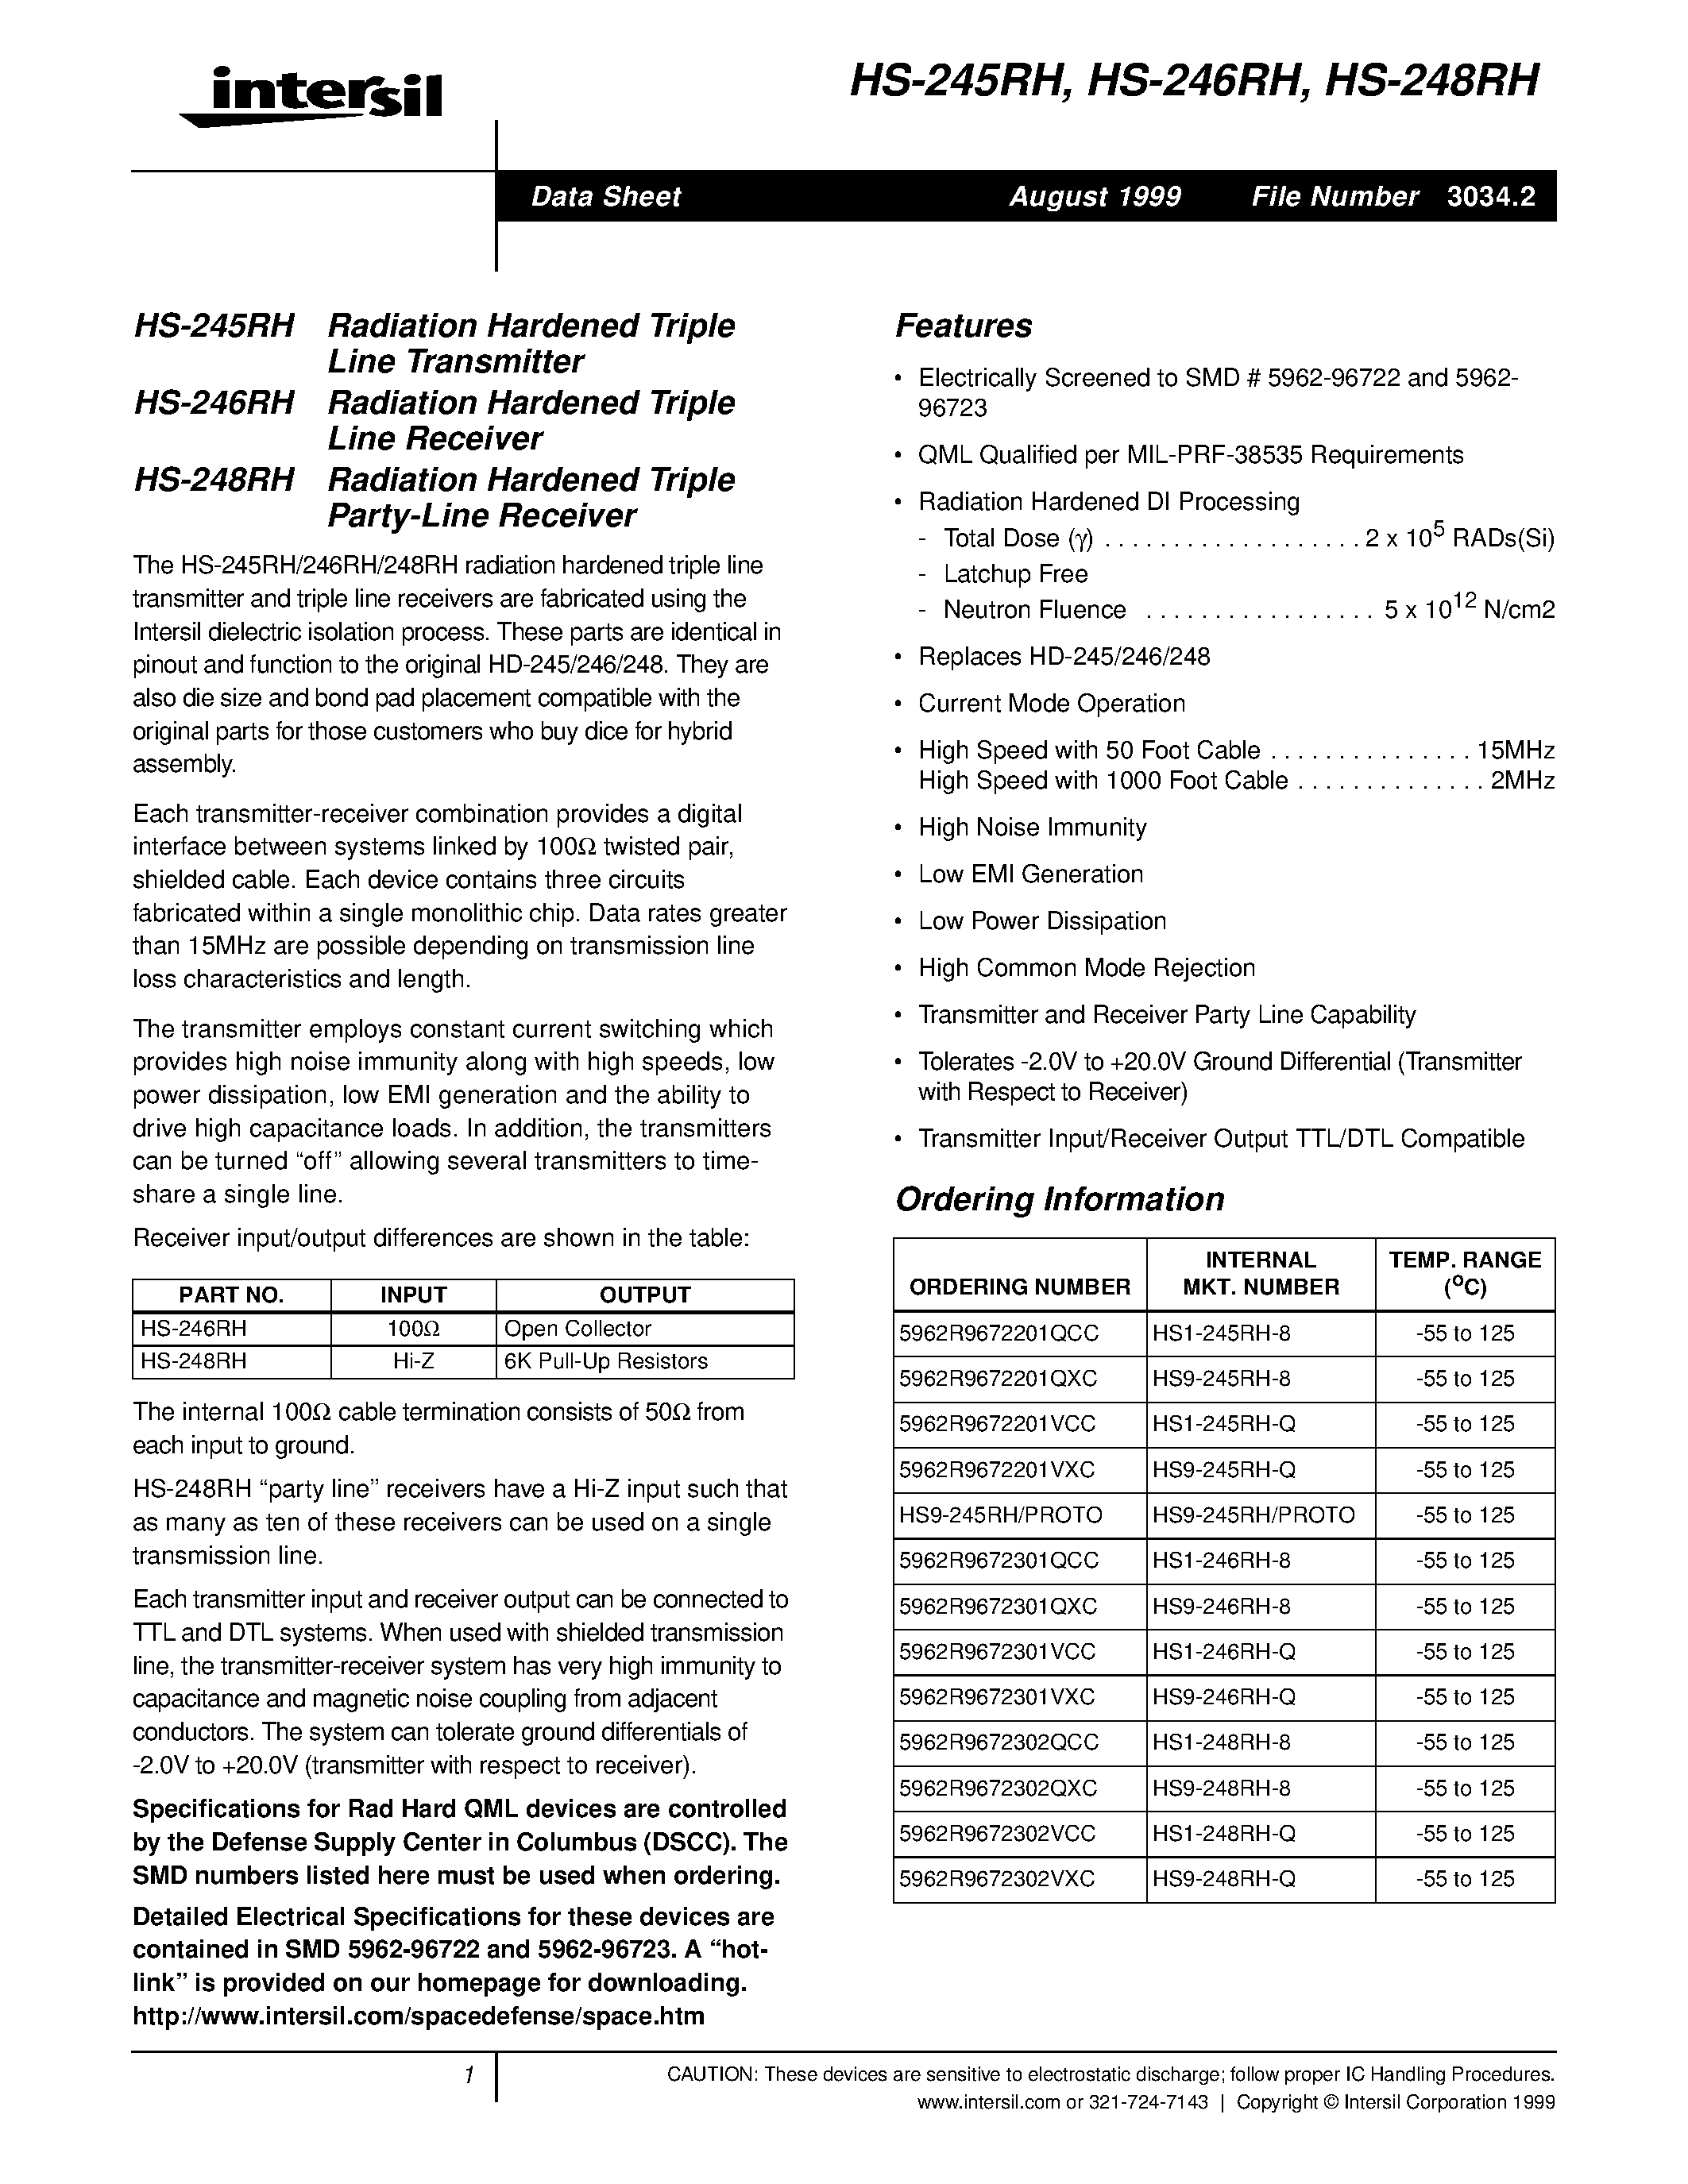 Datasheet HS9-248RH-8 - Radiation Hardened Triple Line(party-Line) Transmitter page 1